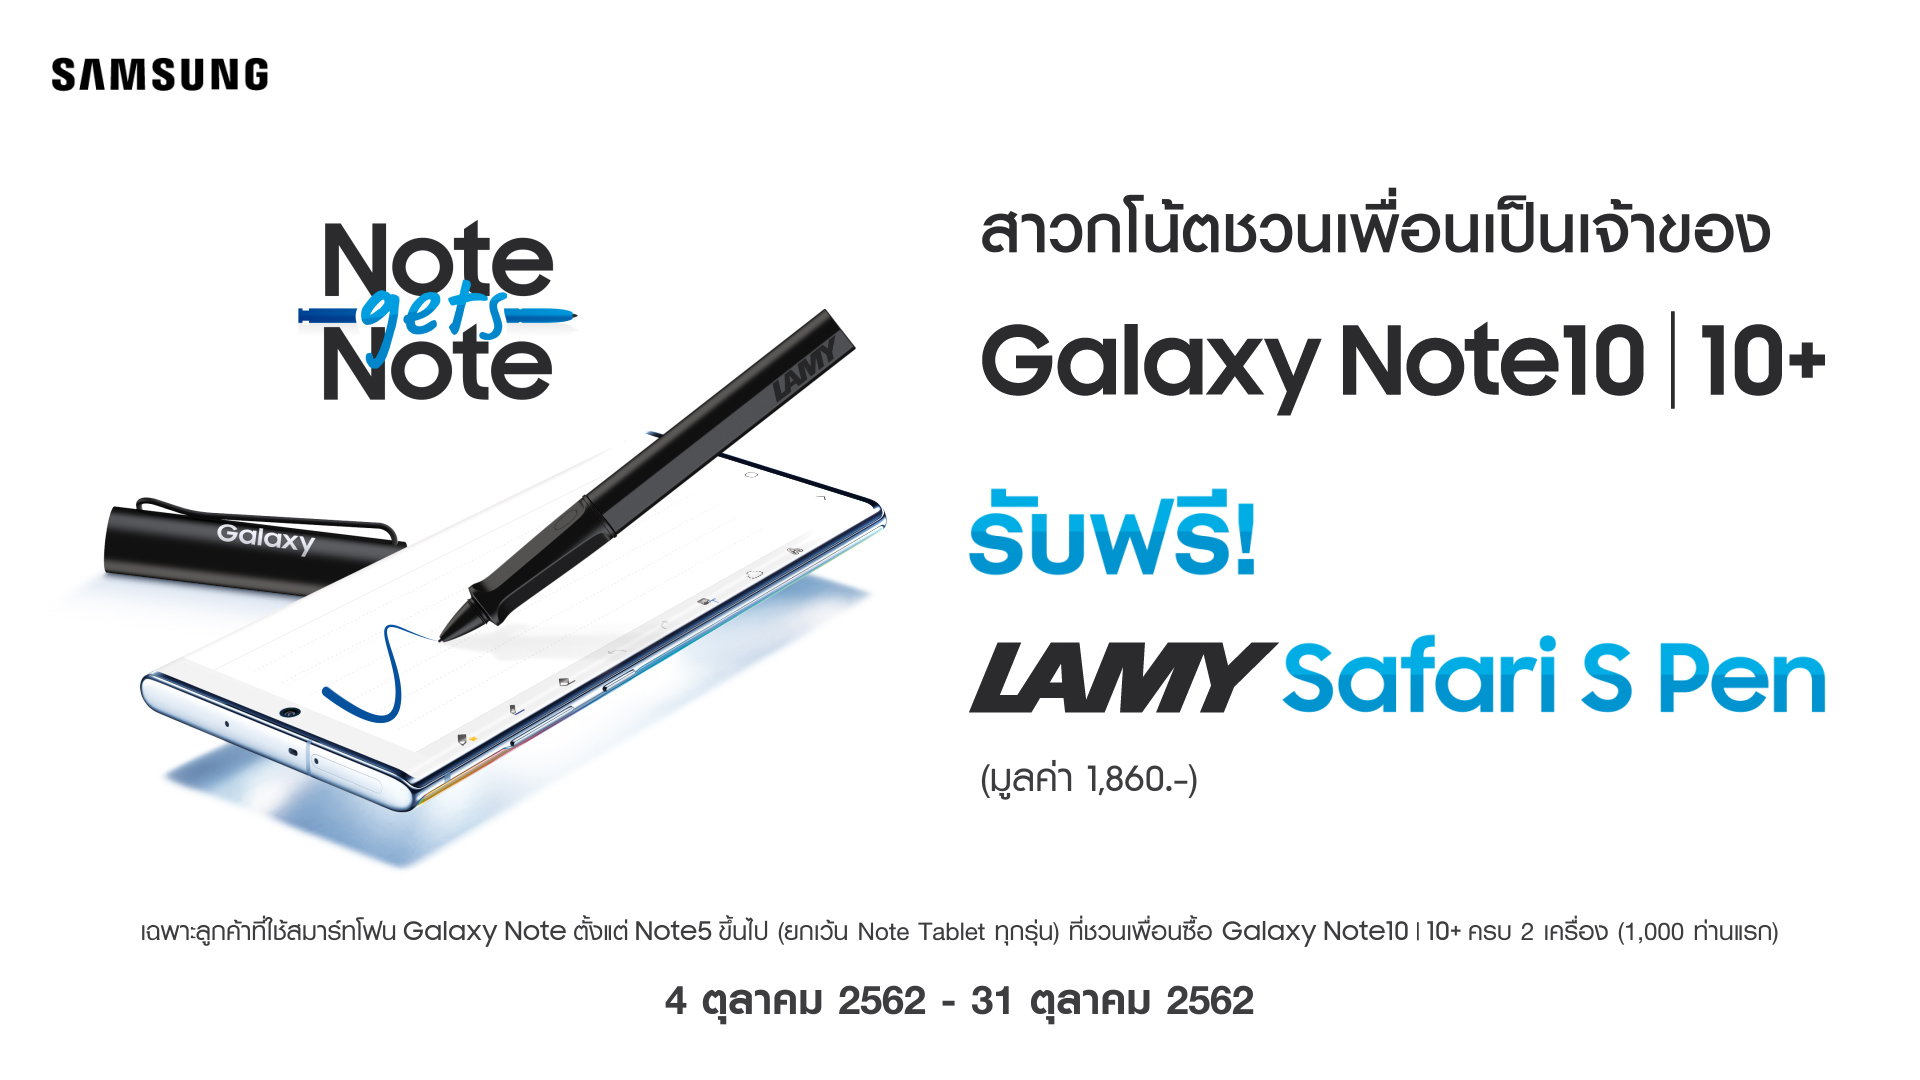 Samsung Note Gets Note